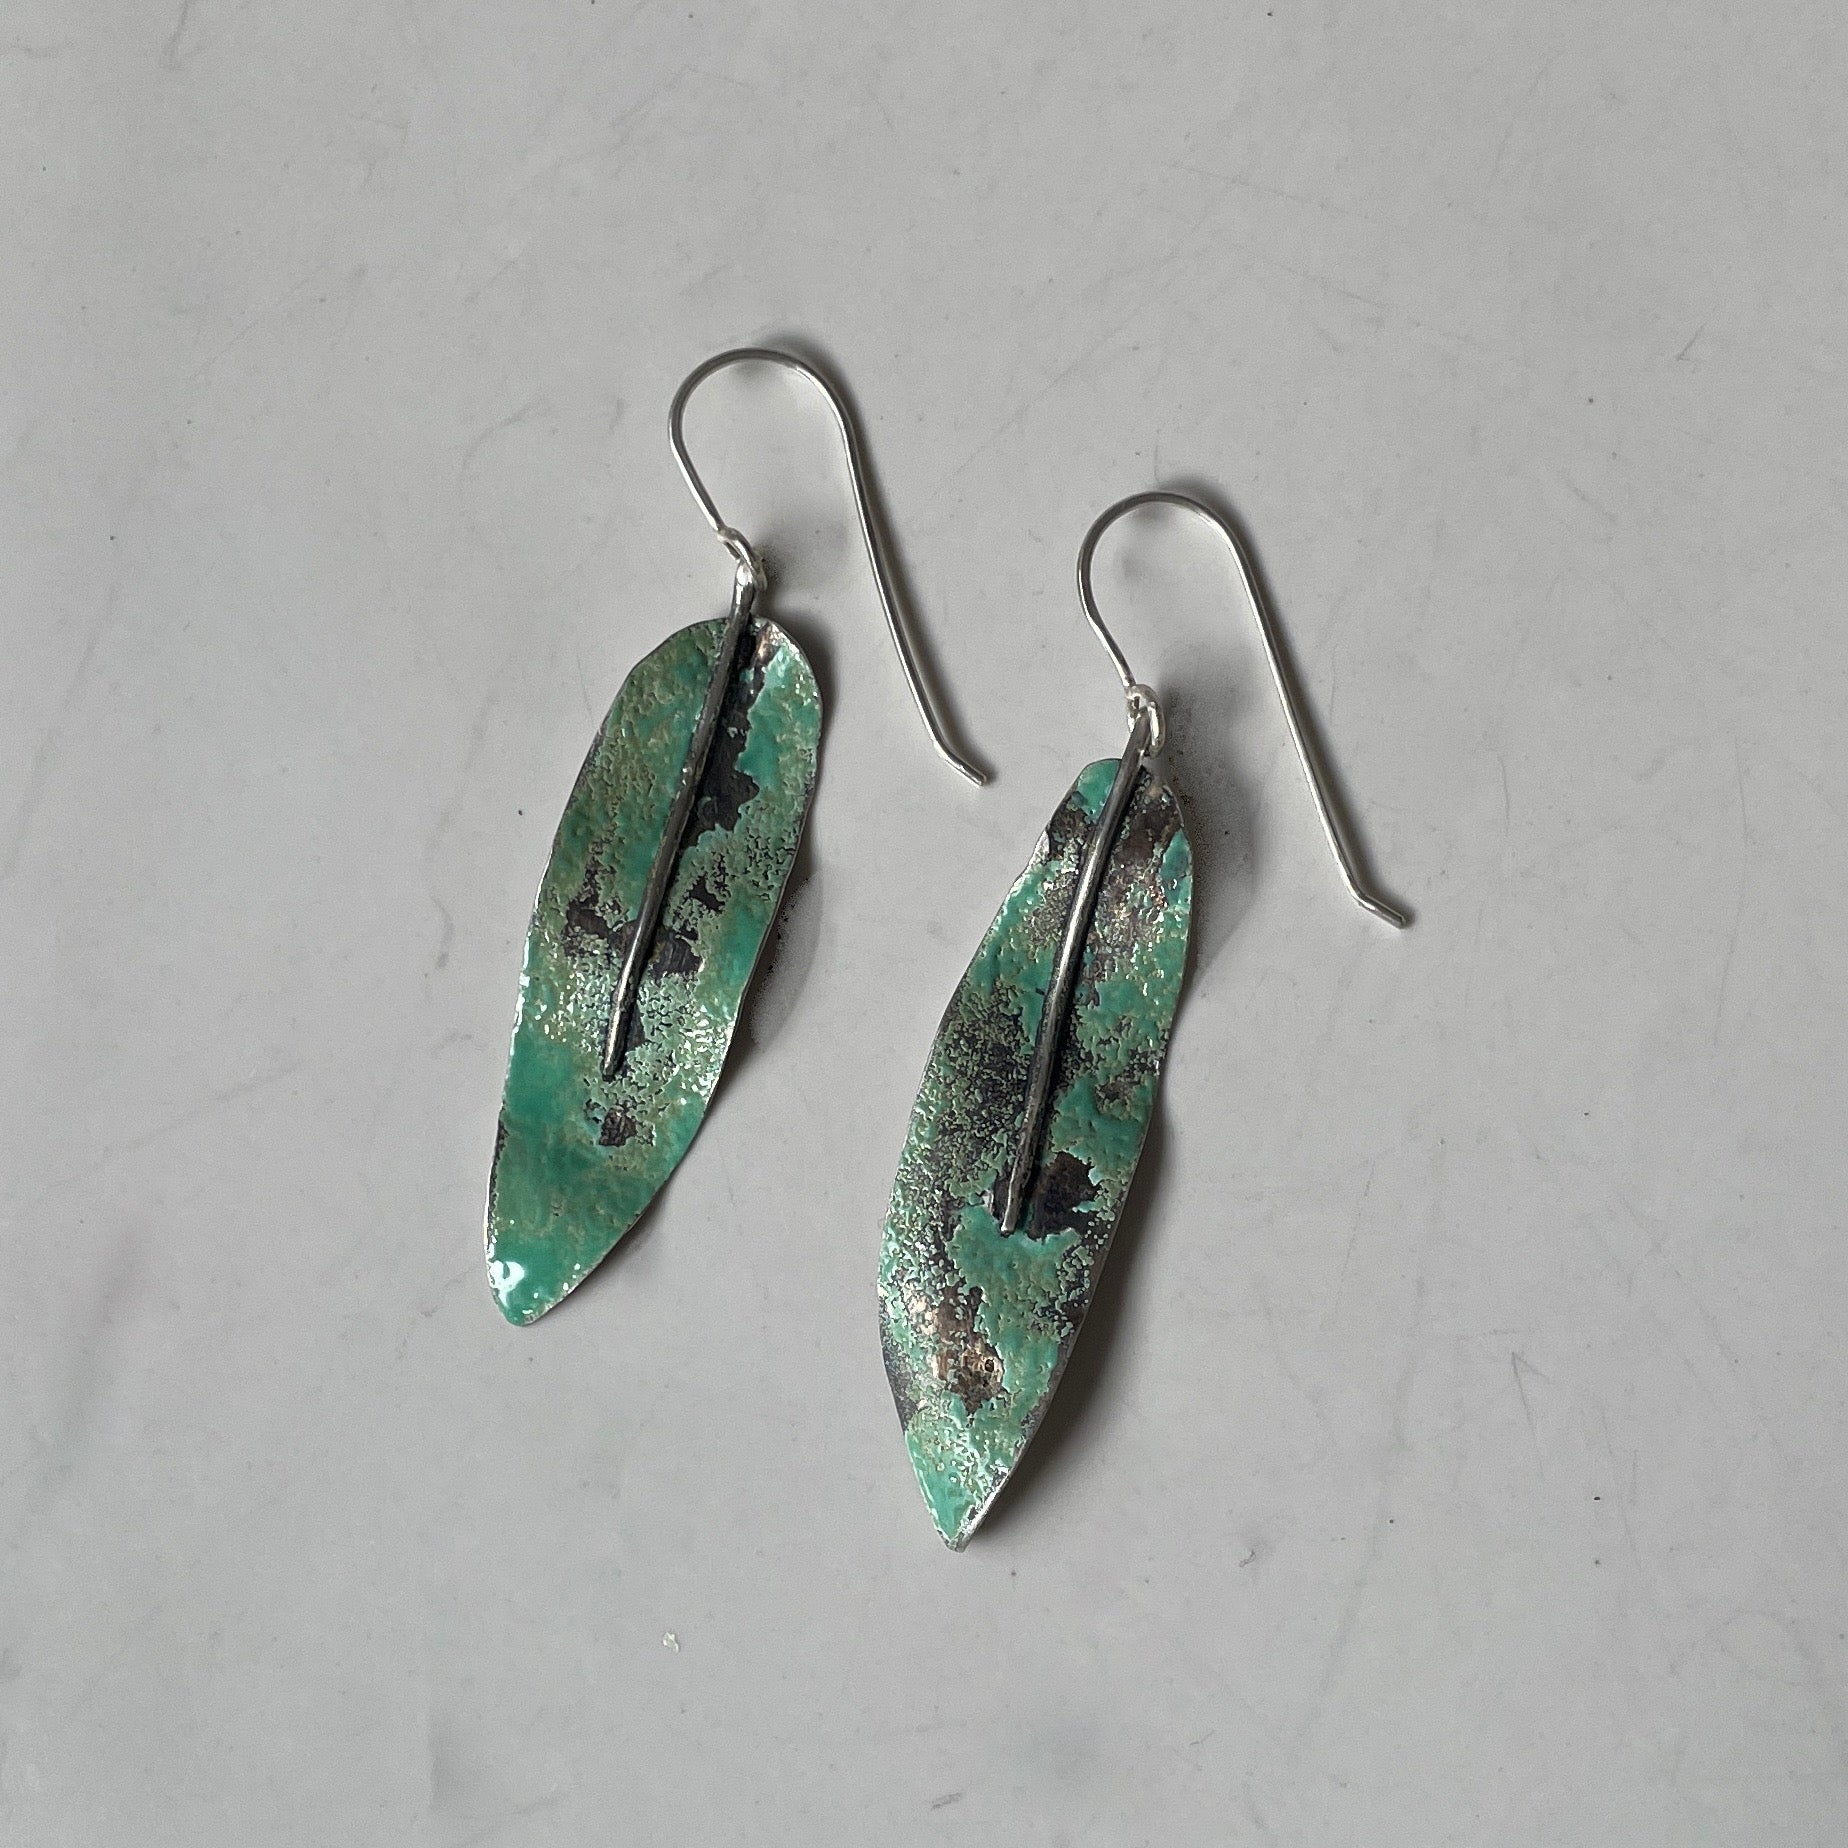 Patina sage leaf earrings